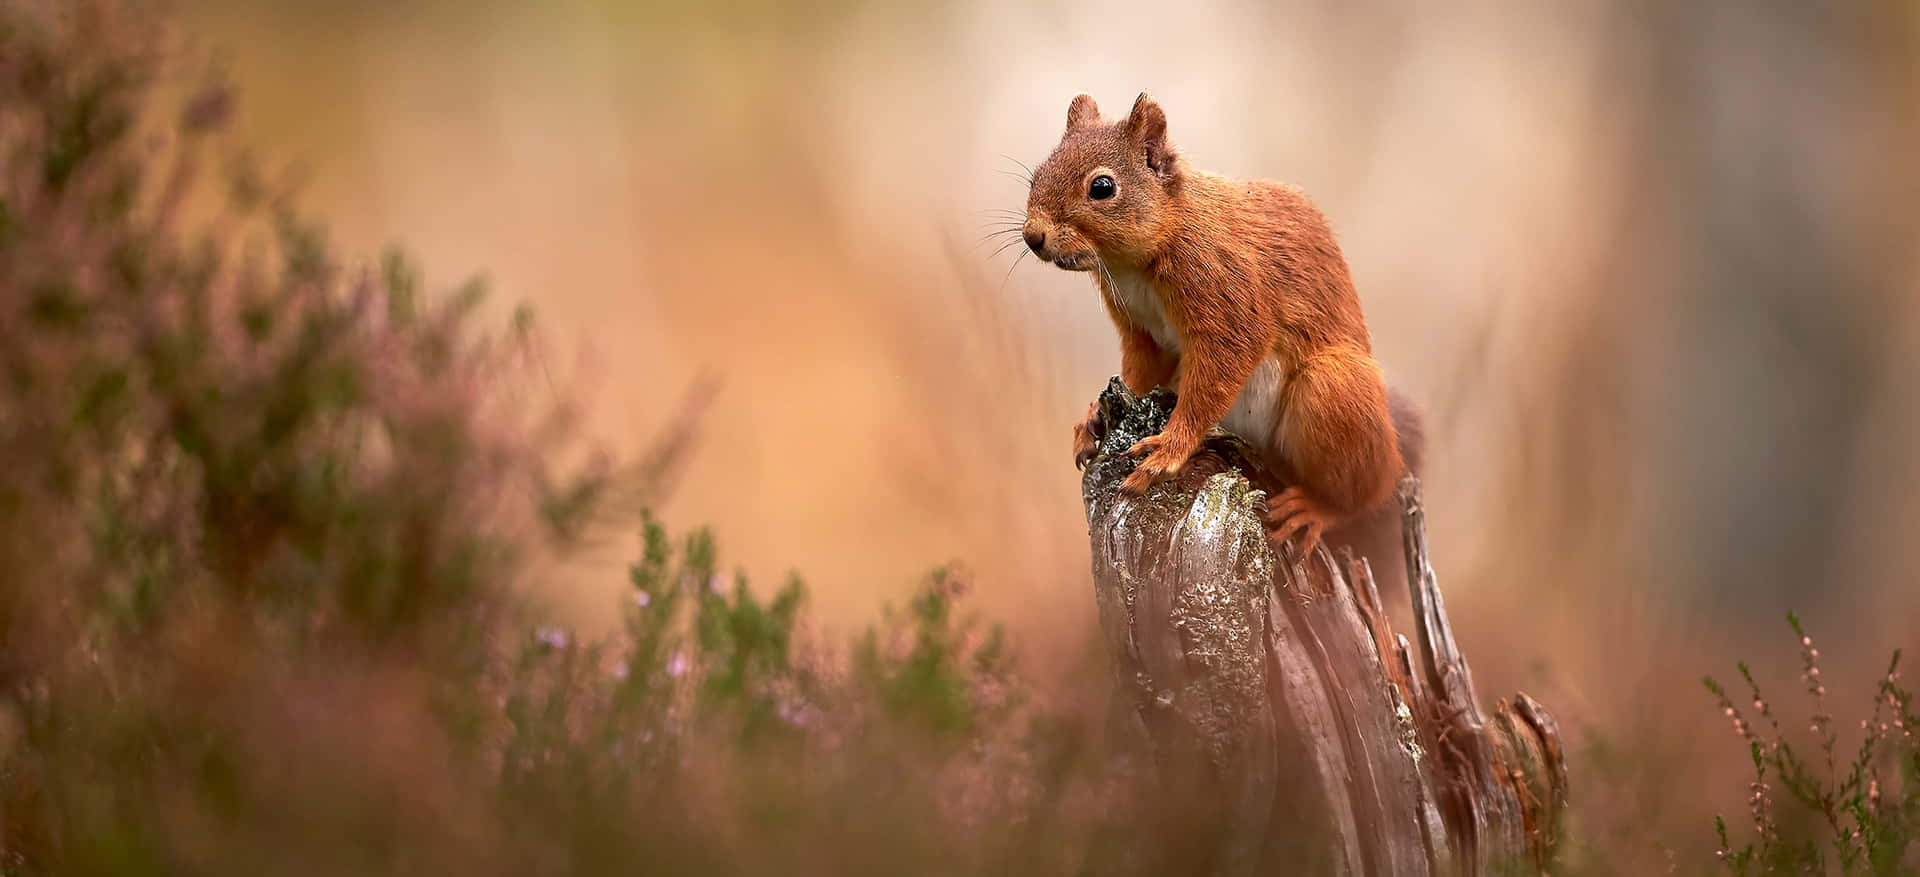 Red Squirrelon Stumpin Habitat.jpg Wallpaper